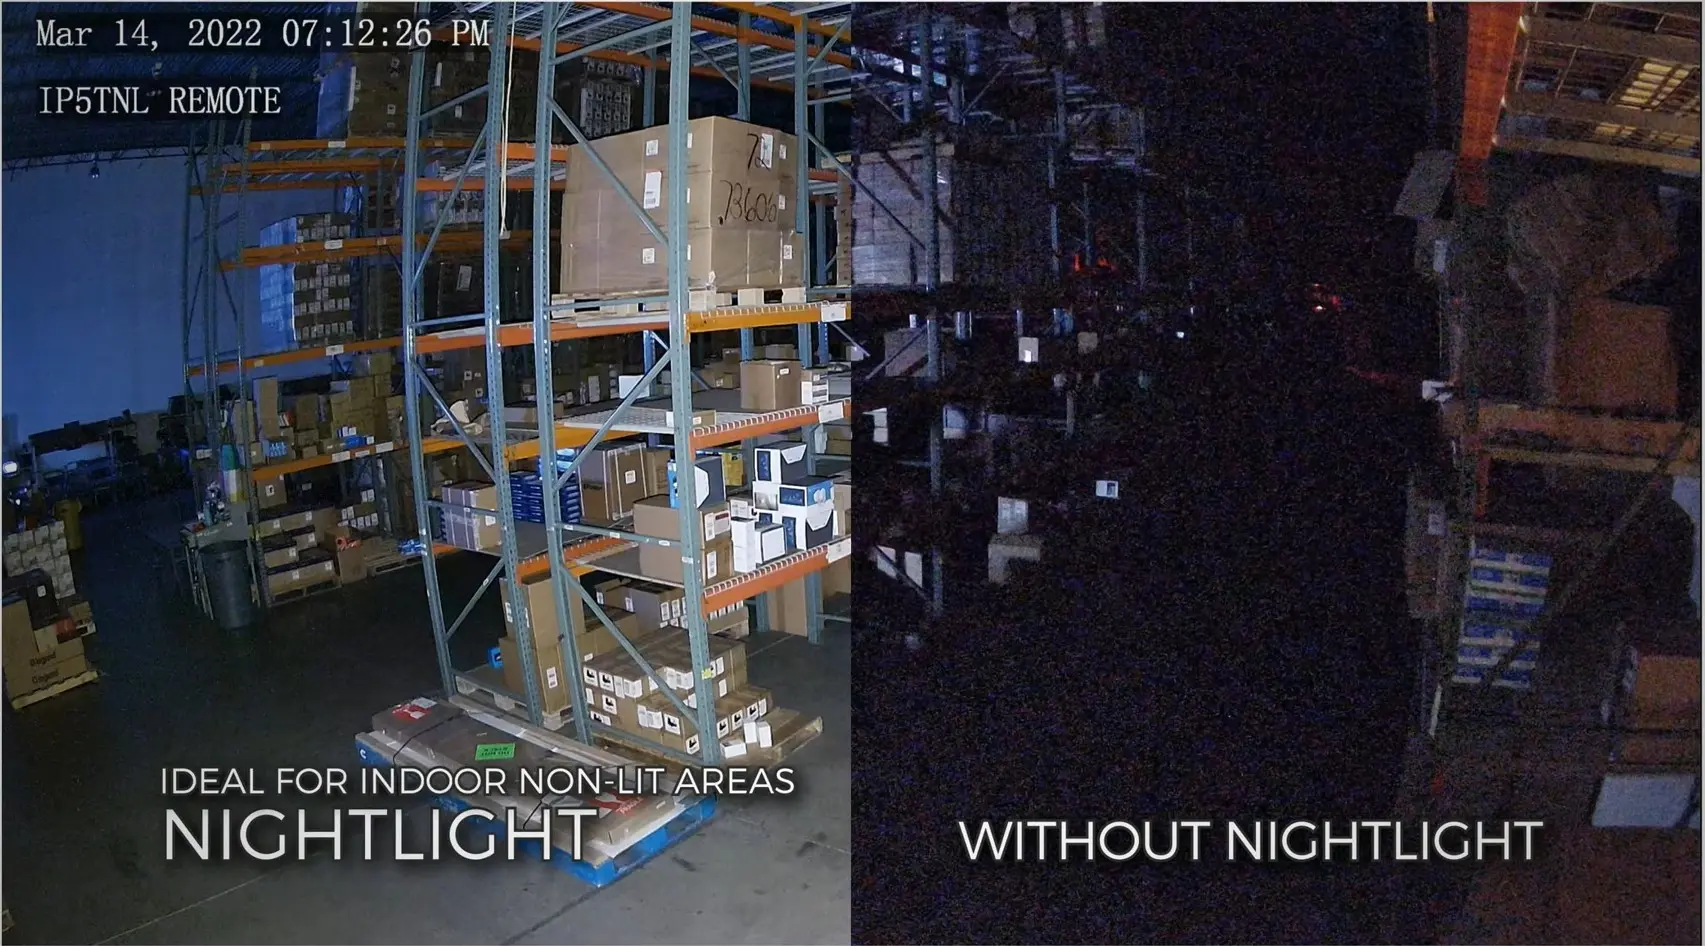 NightLight Example Image